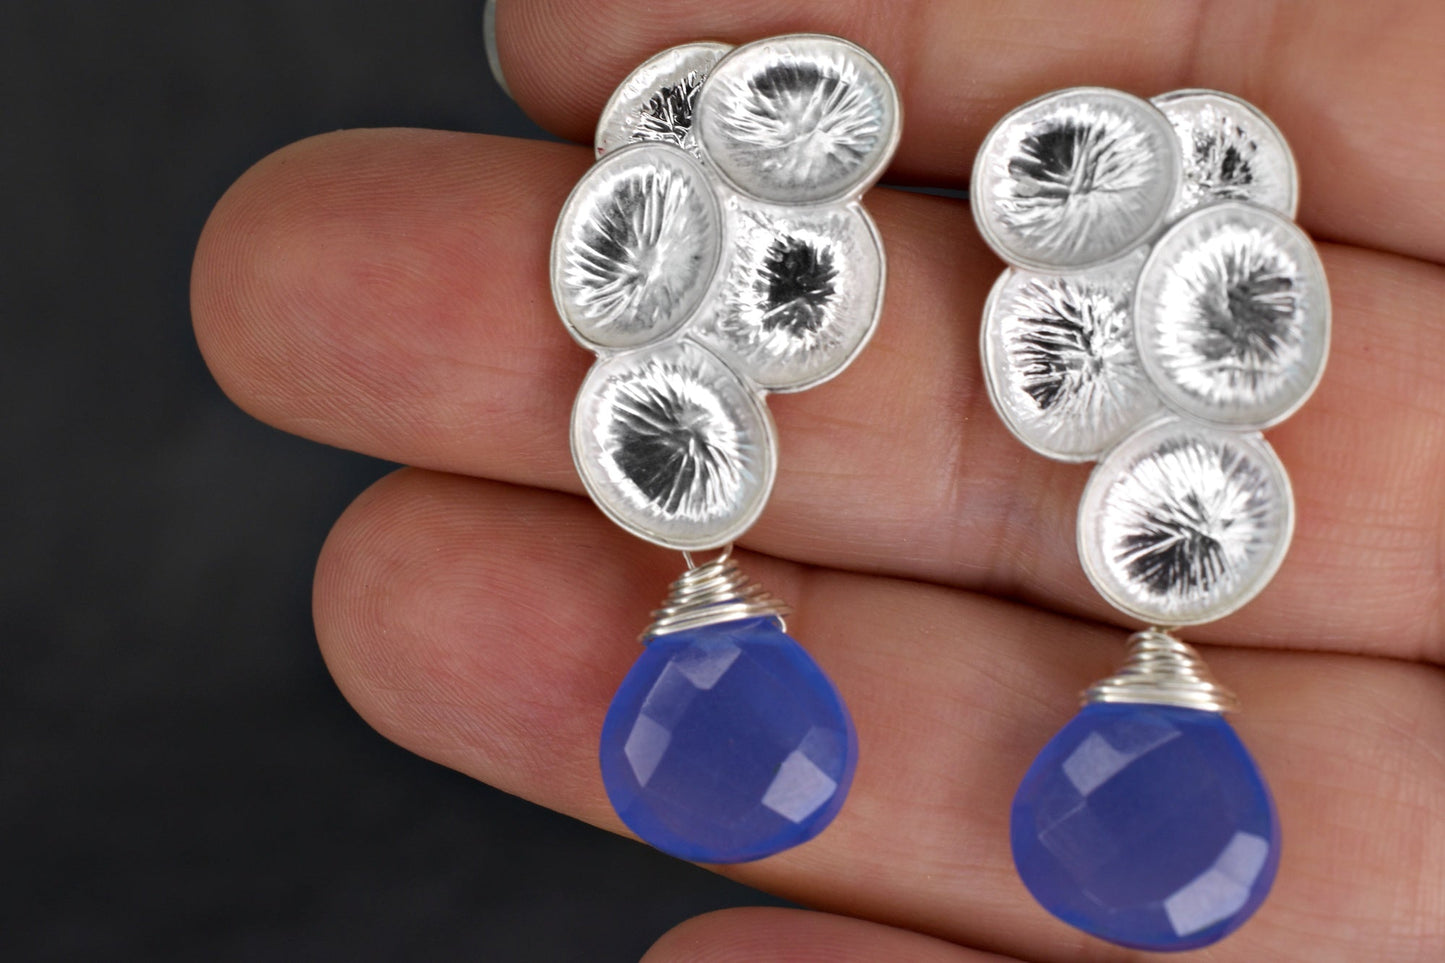 Gemstone earrings with chalcedon "raindrops" - vinohr-23